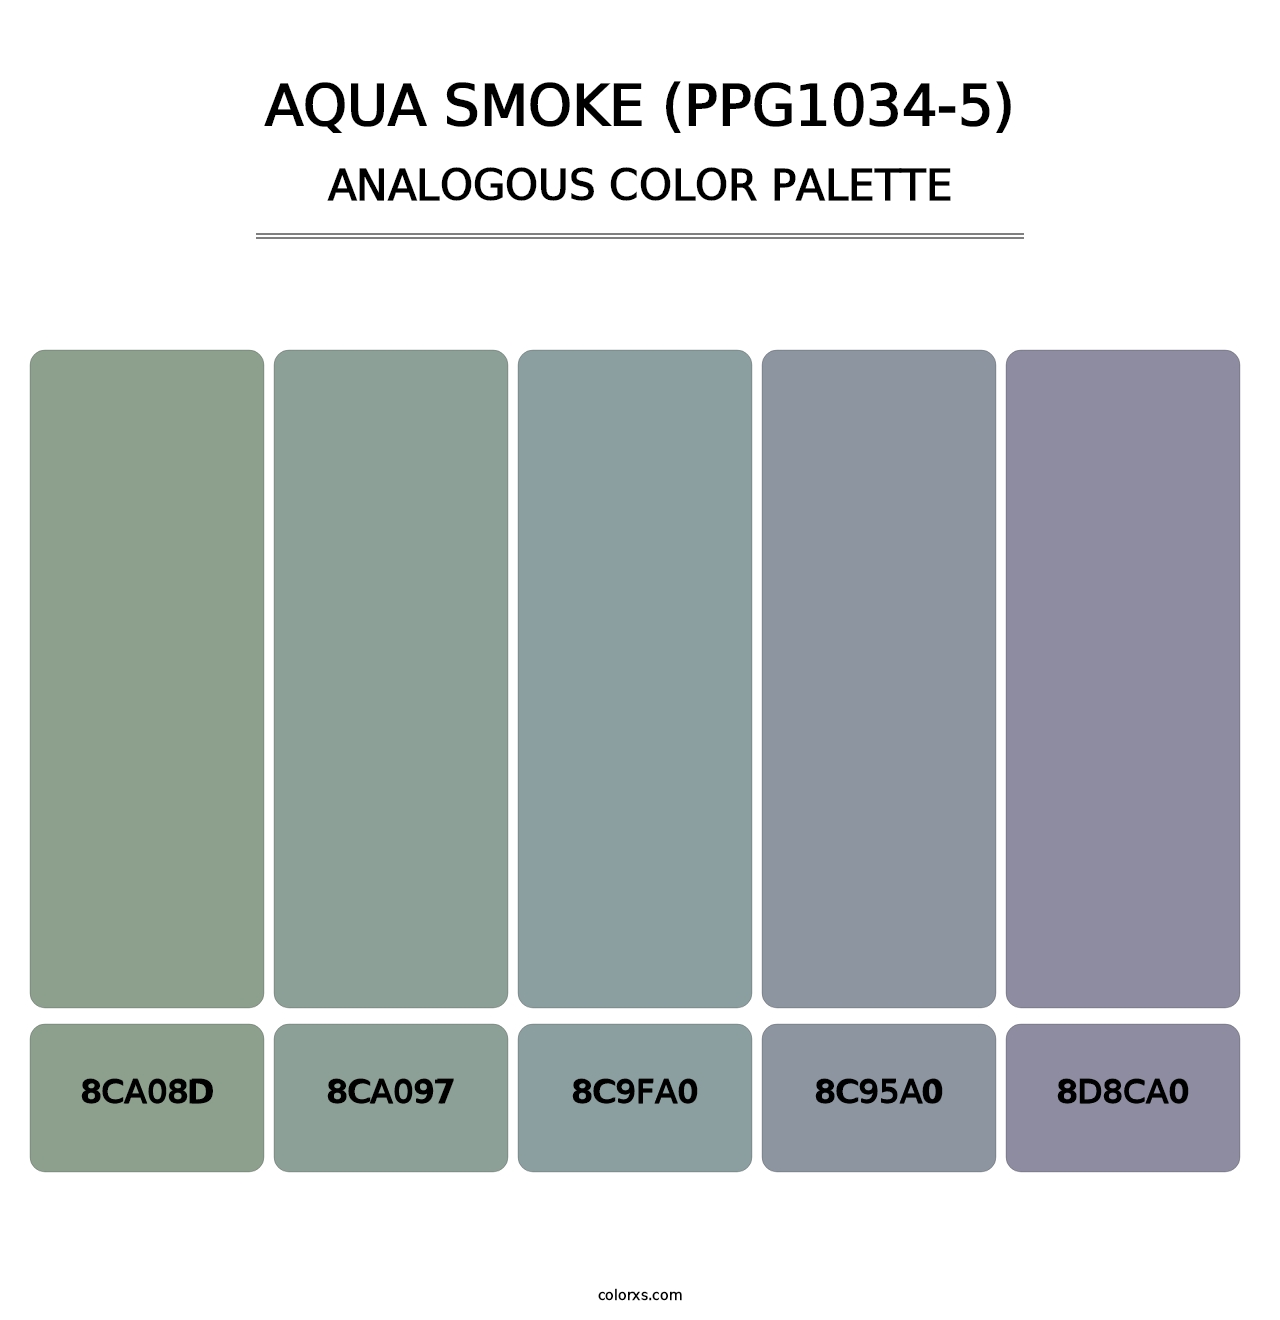 Aqua Smoke (PPG1034-5) - Analogous Color Palette